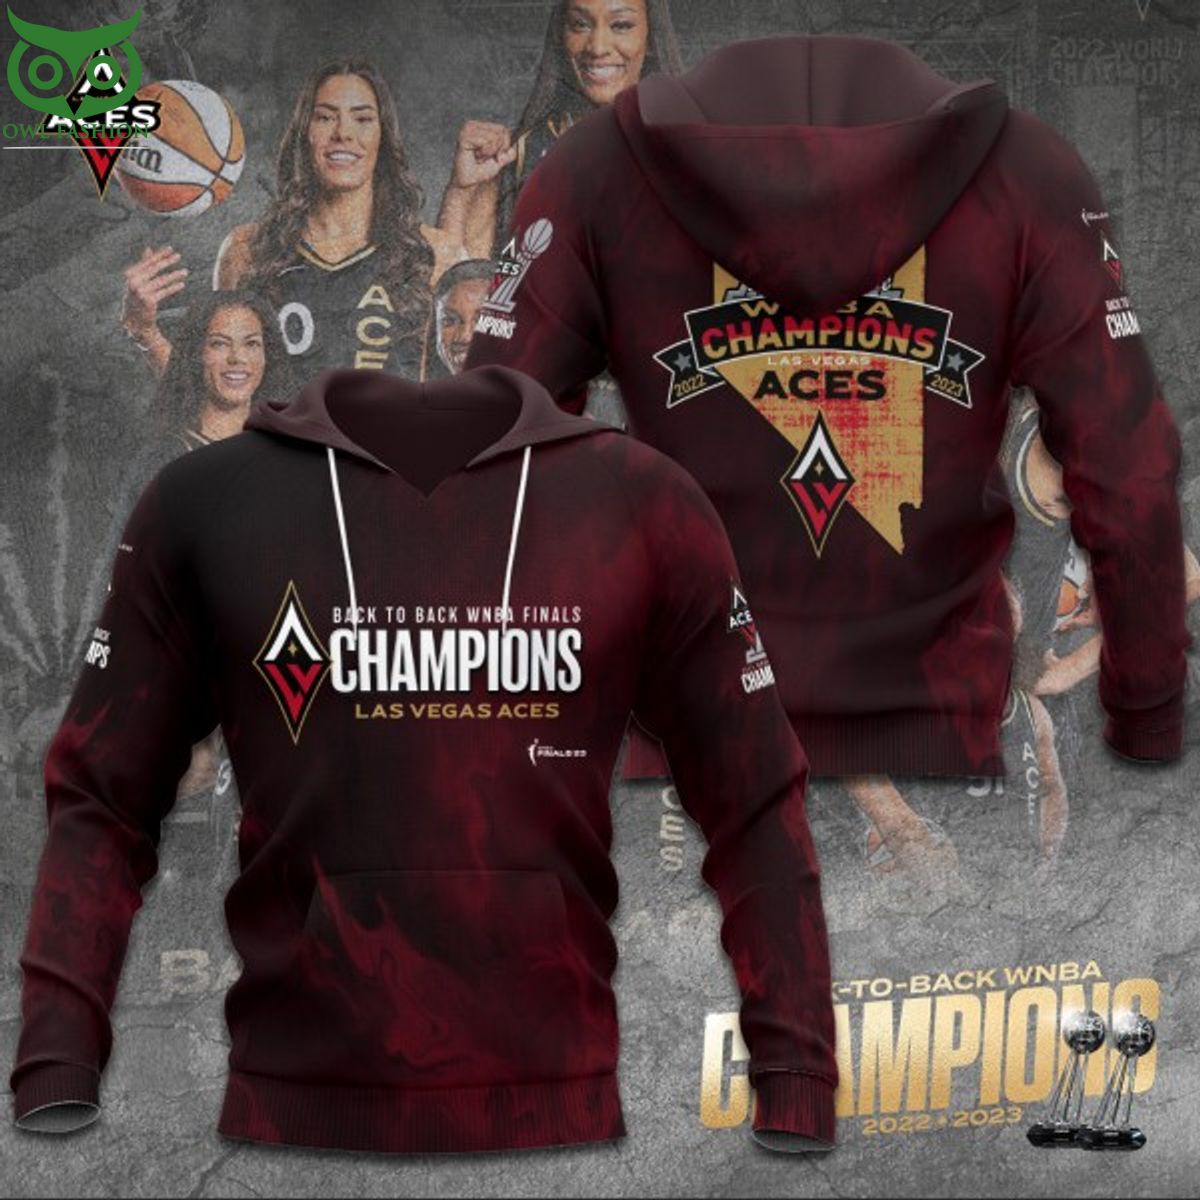 Back 2 Back WNBA Finals Champions 2023 Las Vegas Aces Shirt